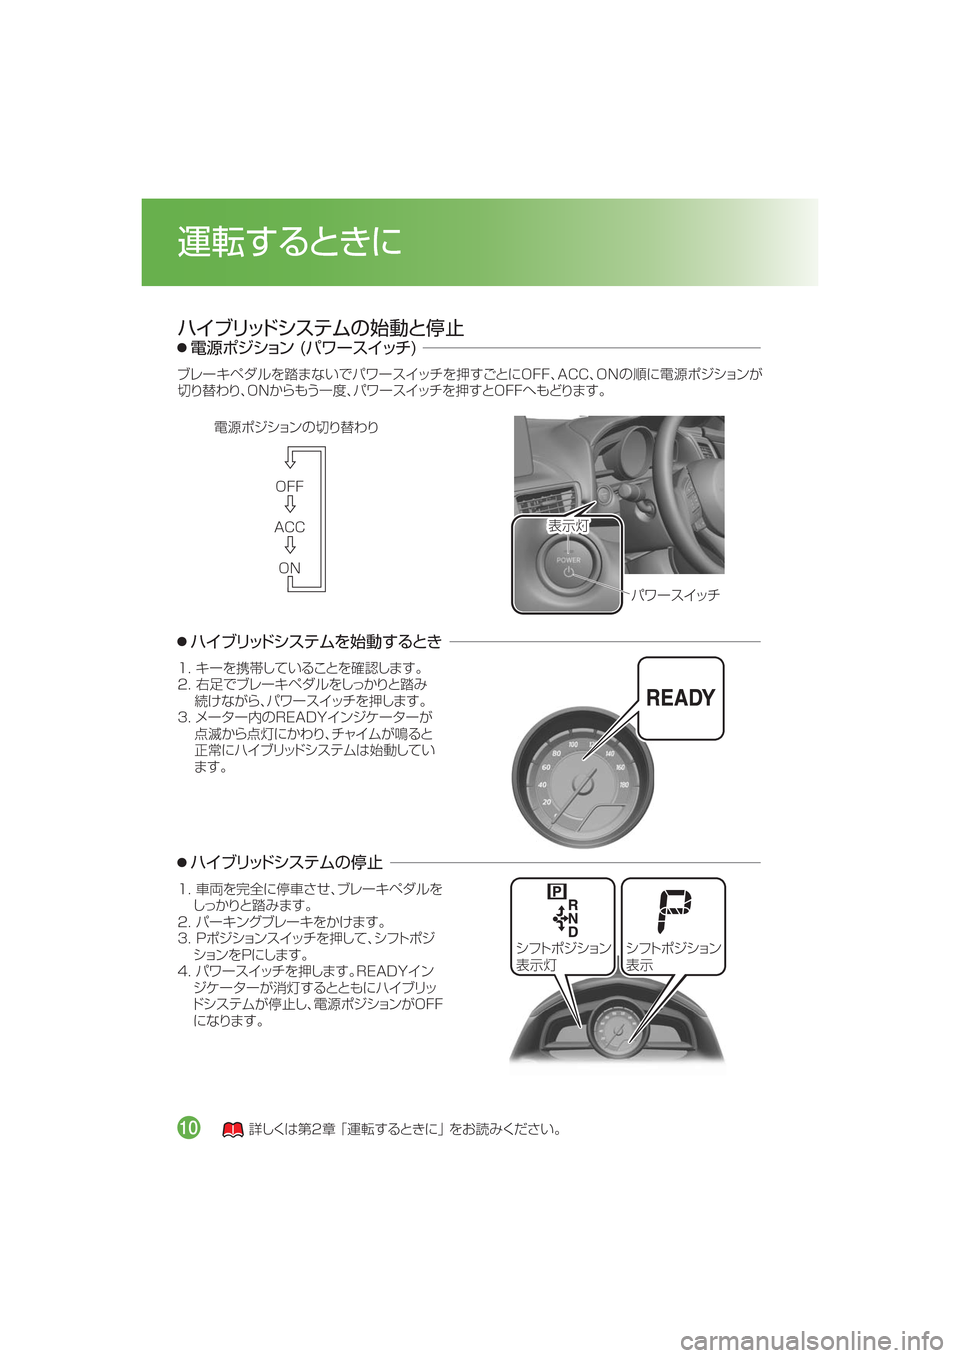 MAZDA MODEL AXELA HYBRID 2015  アクセラハイブリッド｜取扱説明書 (in Japanese)  �0��
�"�$�$
�0�/
? o 